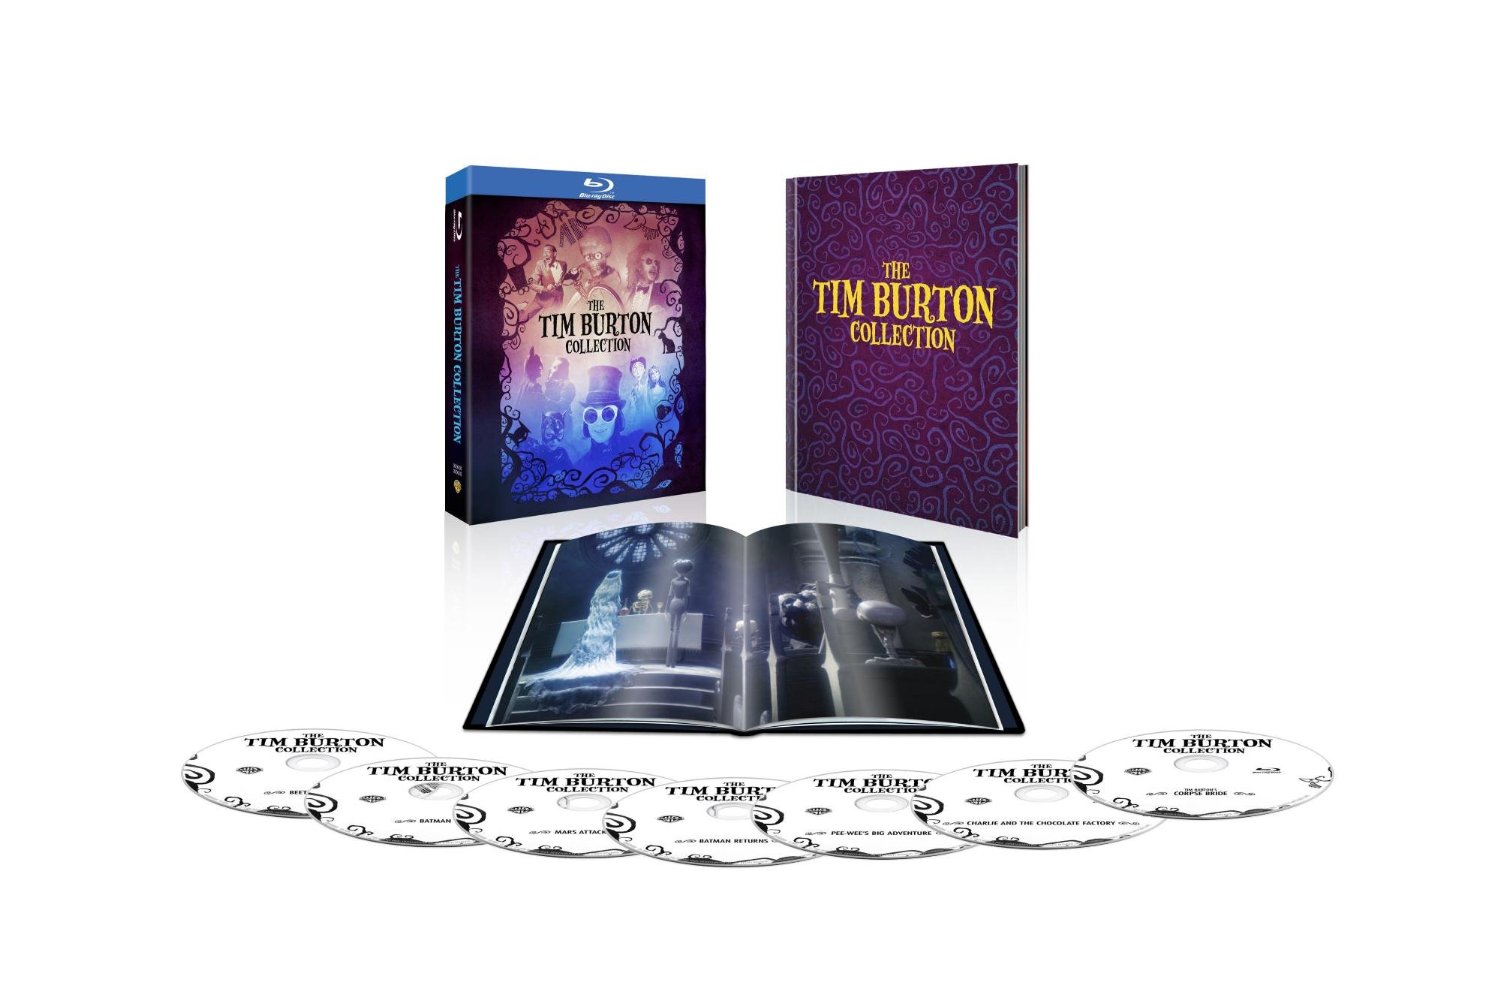 USA - The Tim Burton Collection & Hardcover Book [Blu-ray]